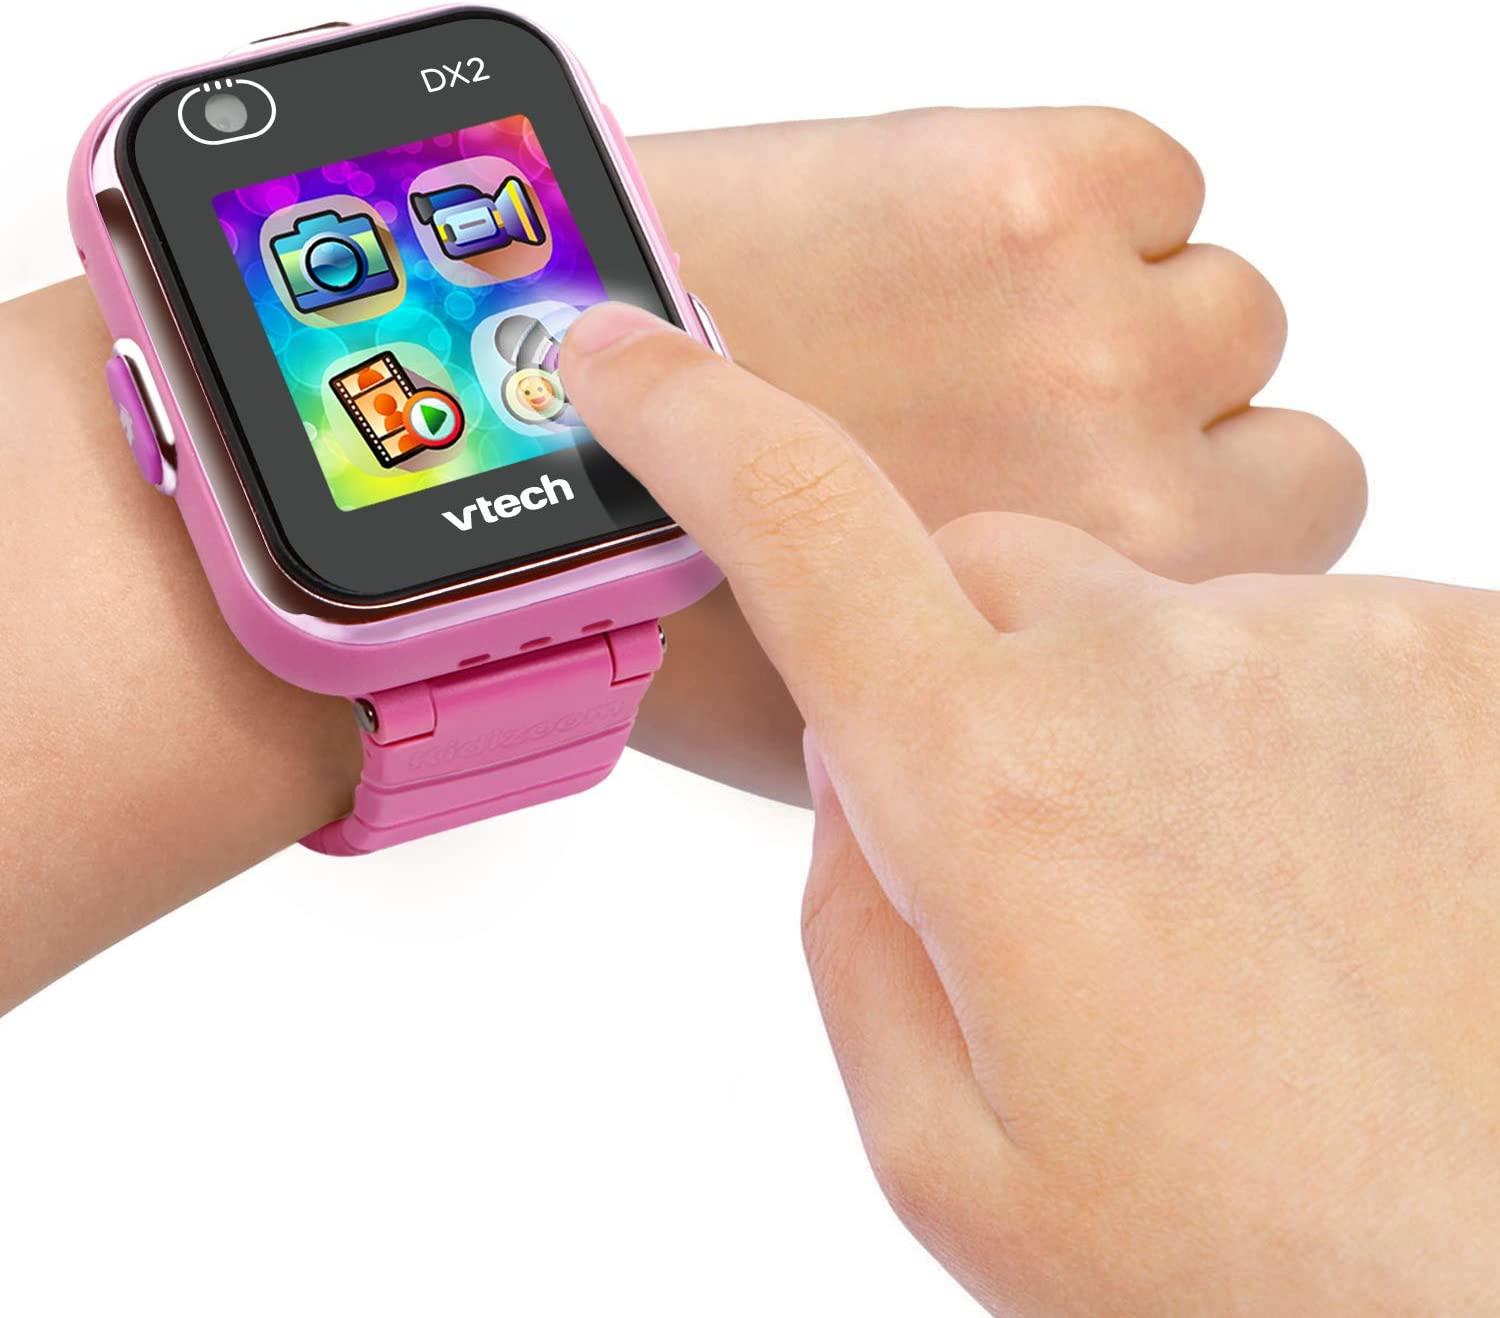 Vtech Kidizoom Smart Watch DX2 Pink Toymaster Ballina